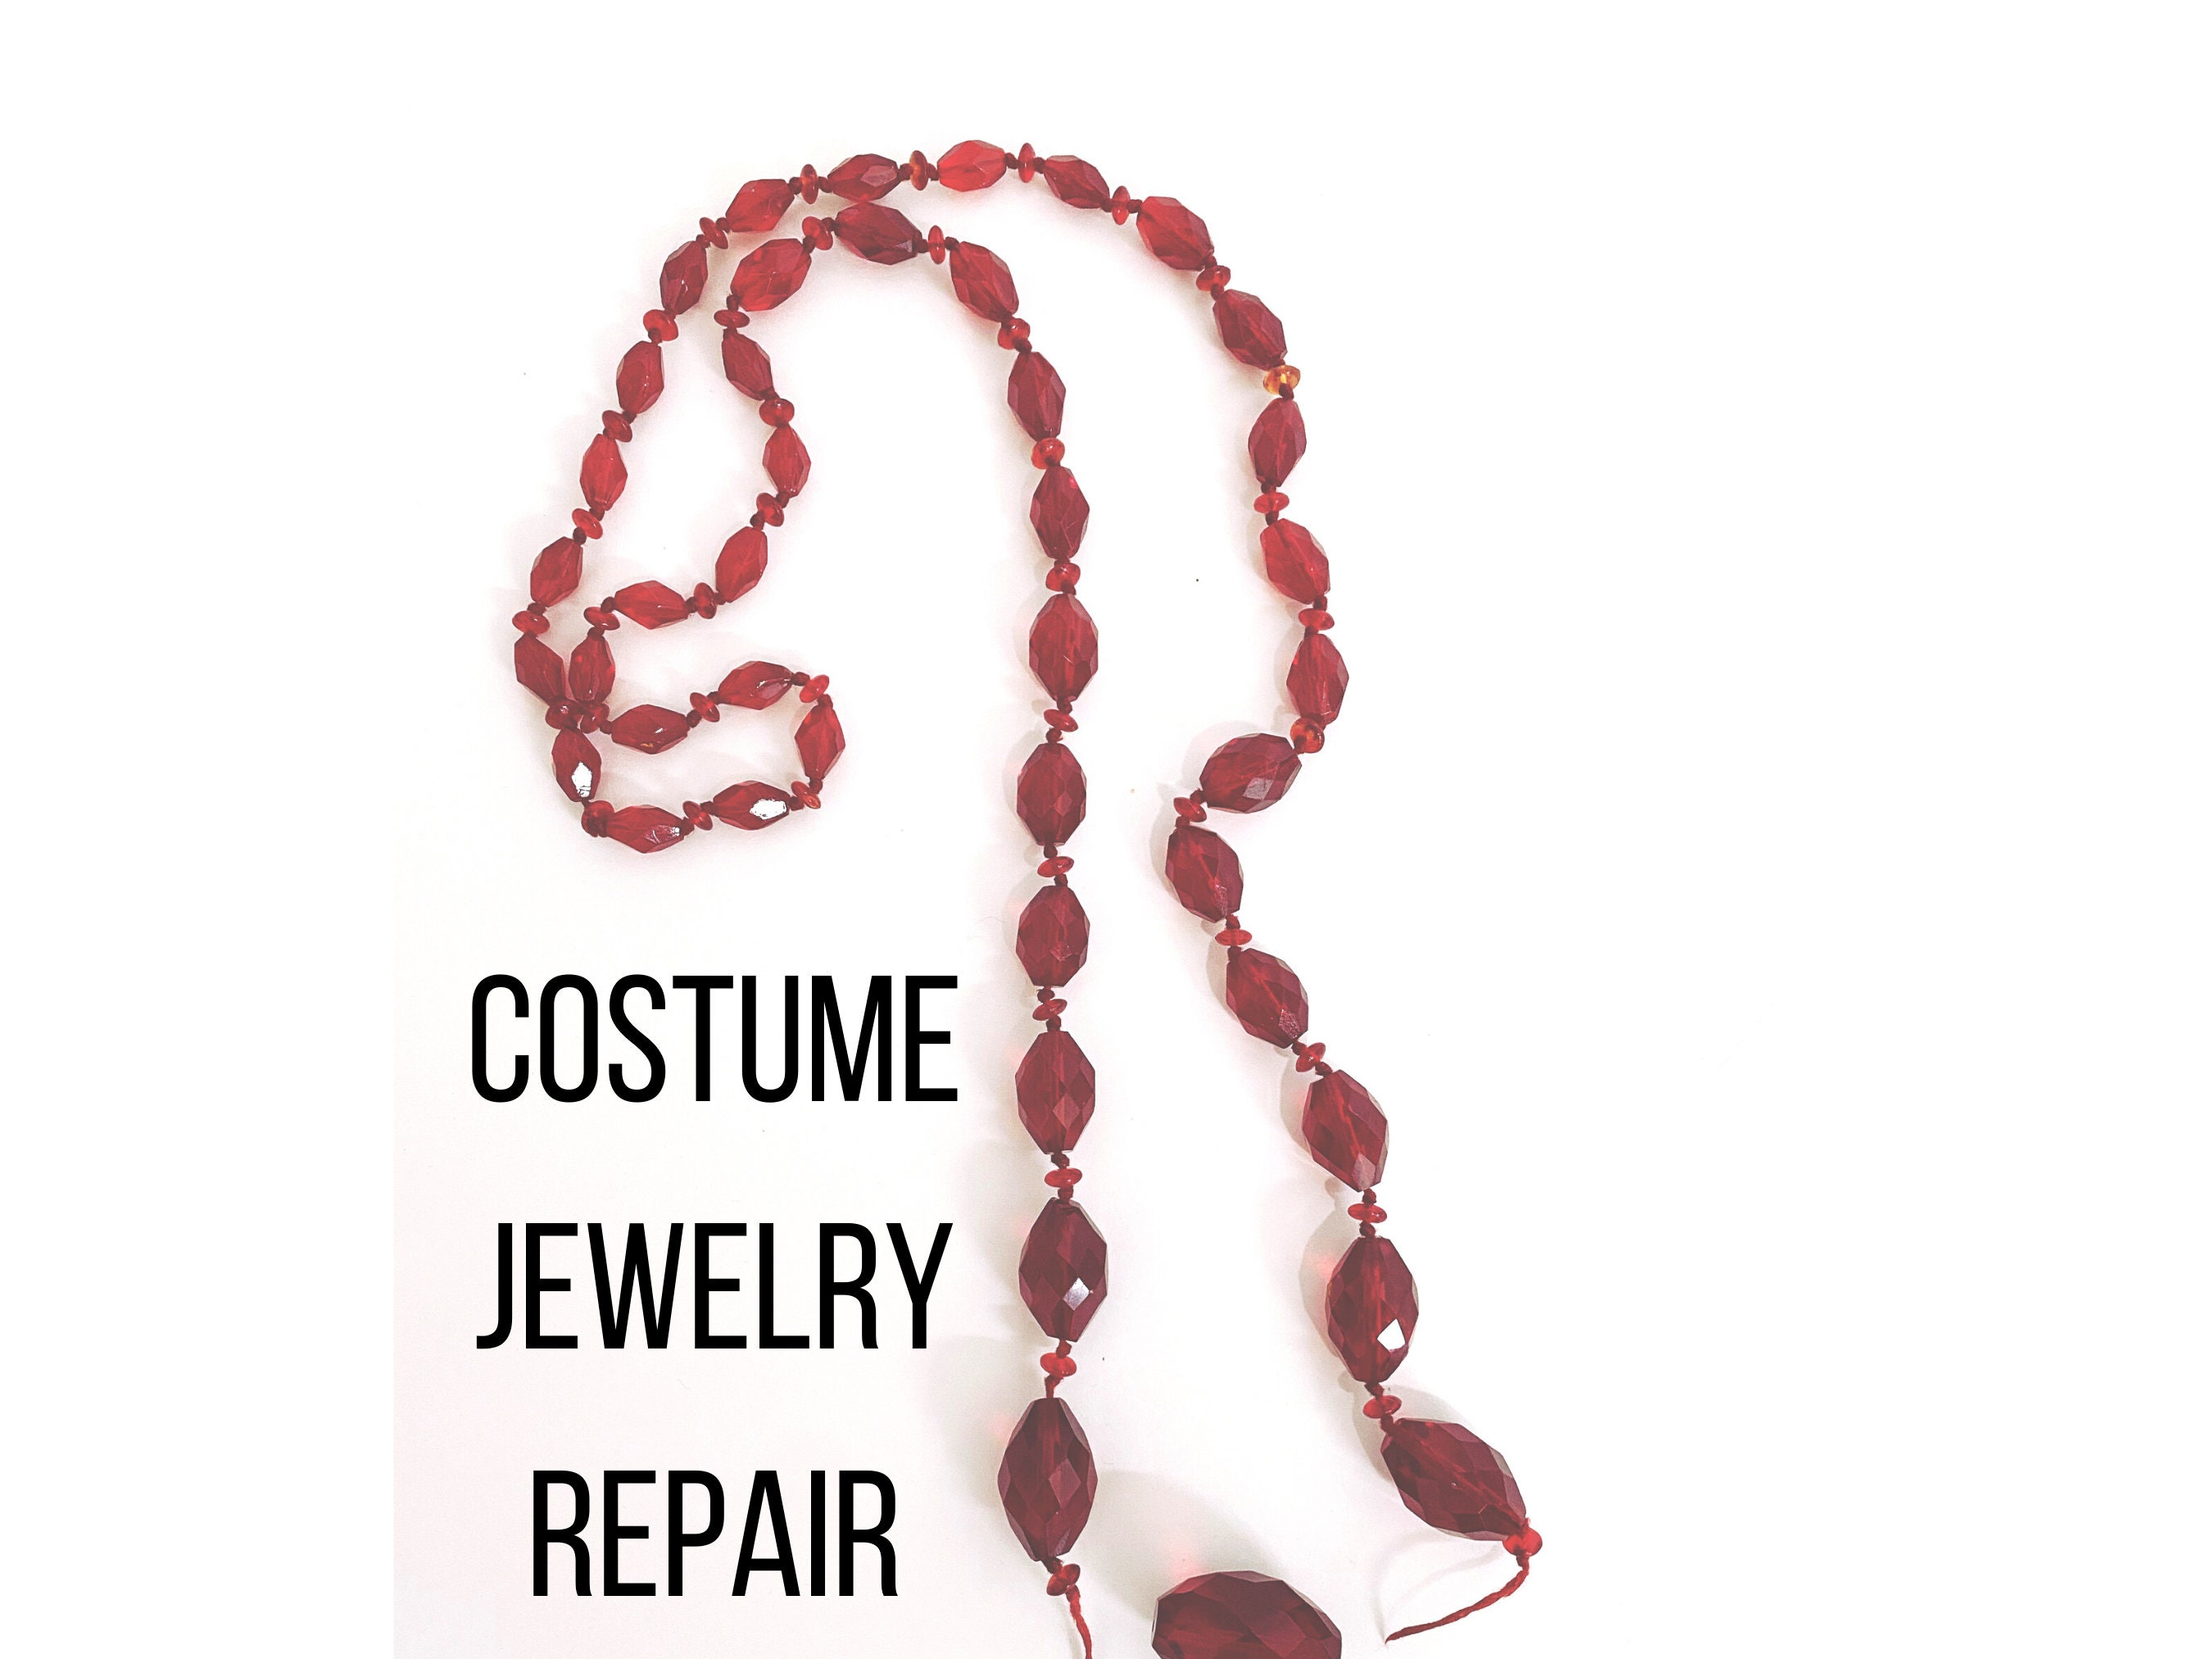 Jewelry Repair Service, Restring Jewelry, Remake Old Vintage